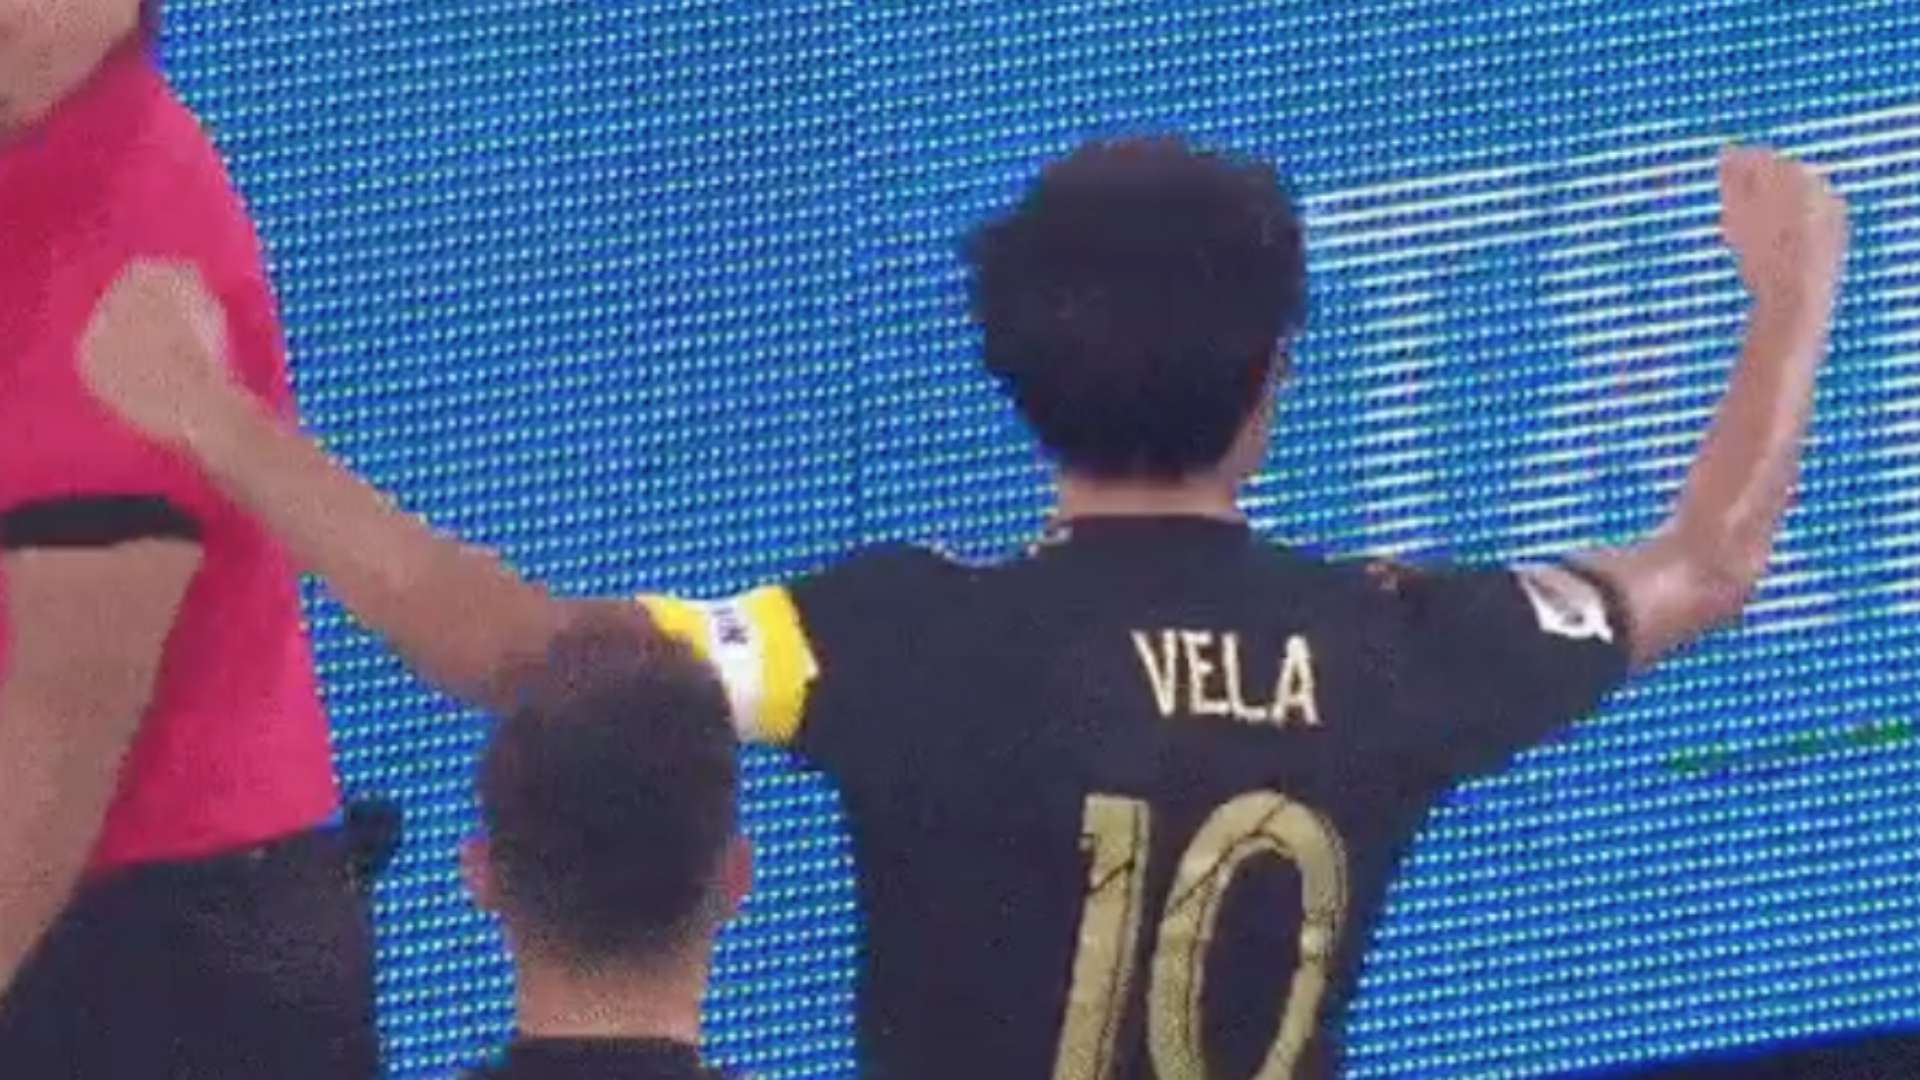 Carlos Vela